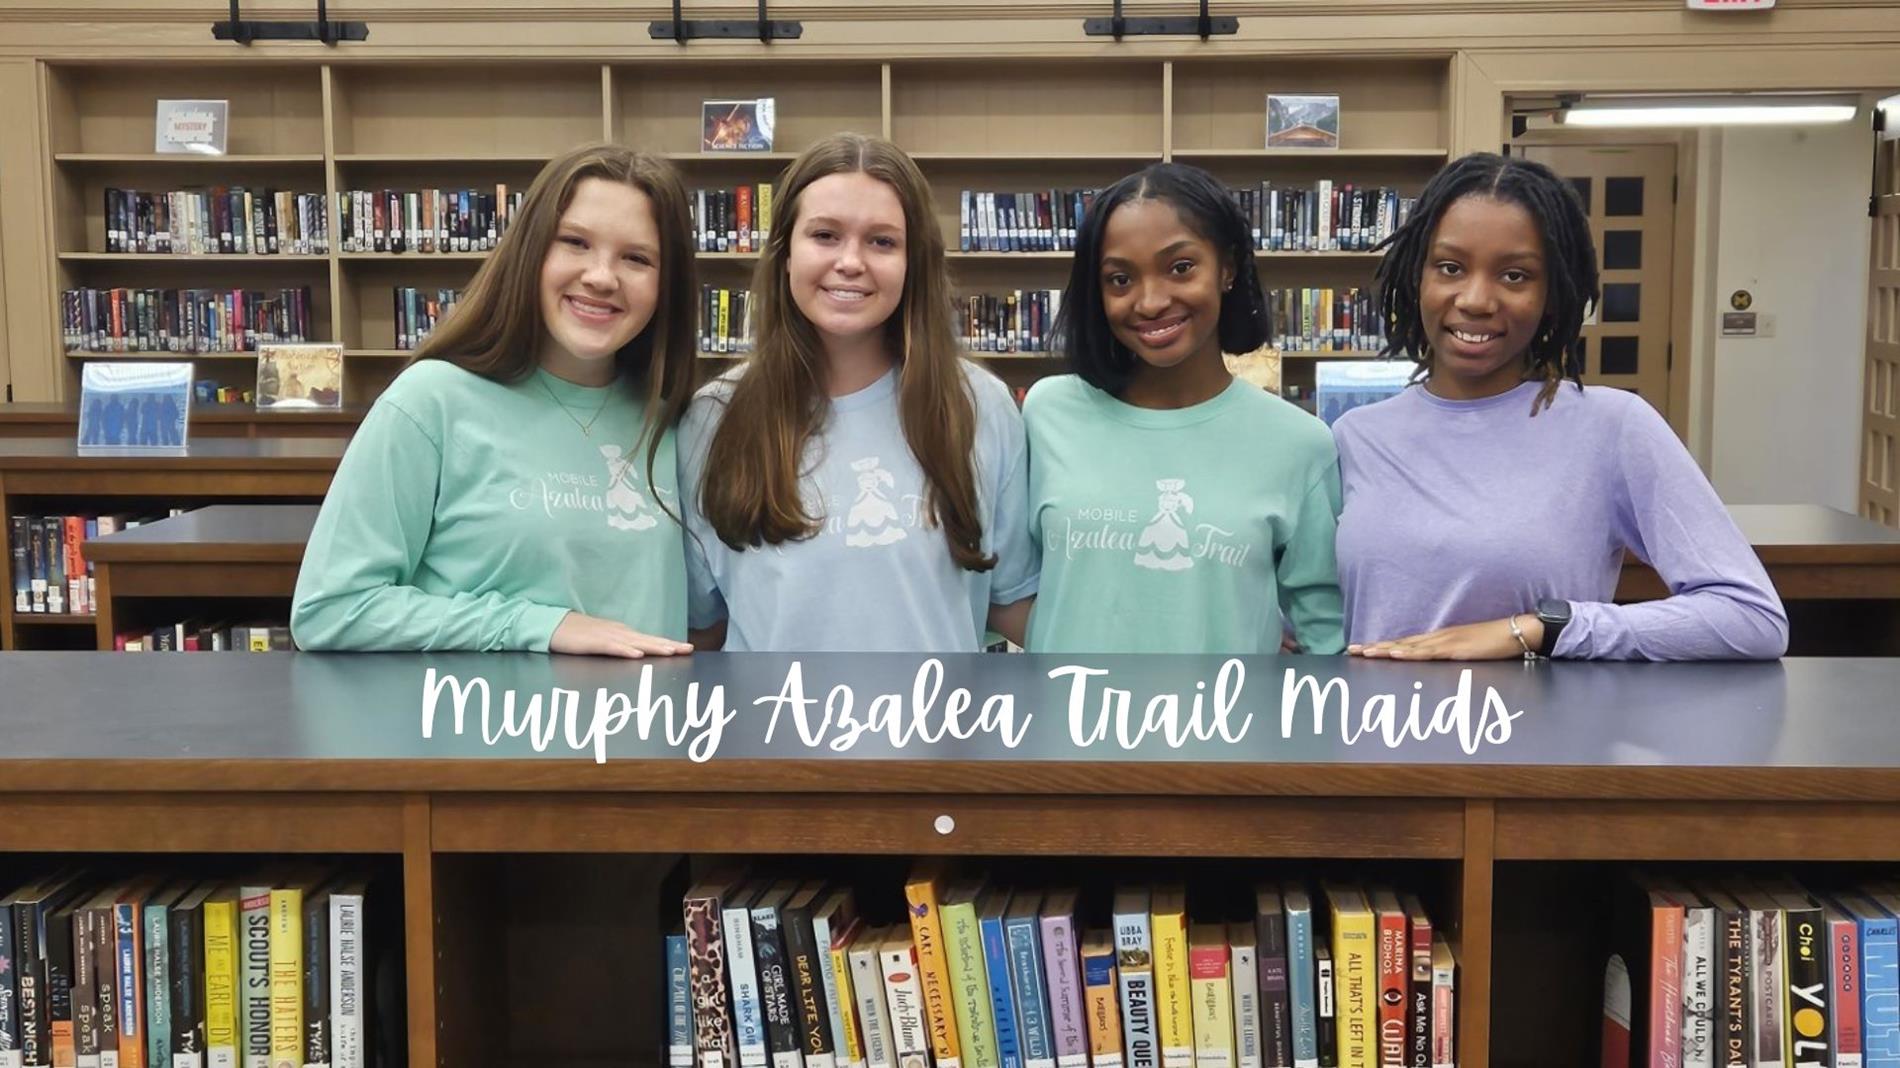 Azalea Trail Maids